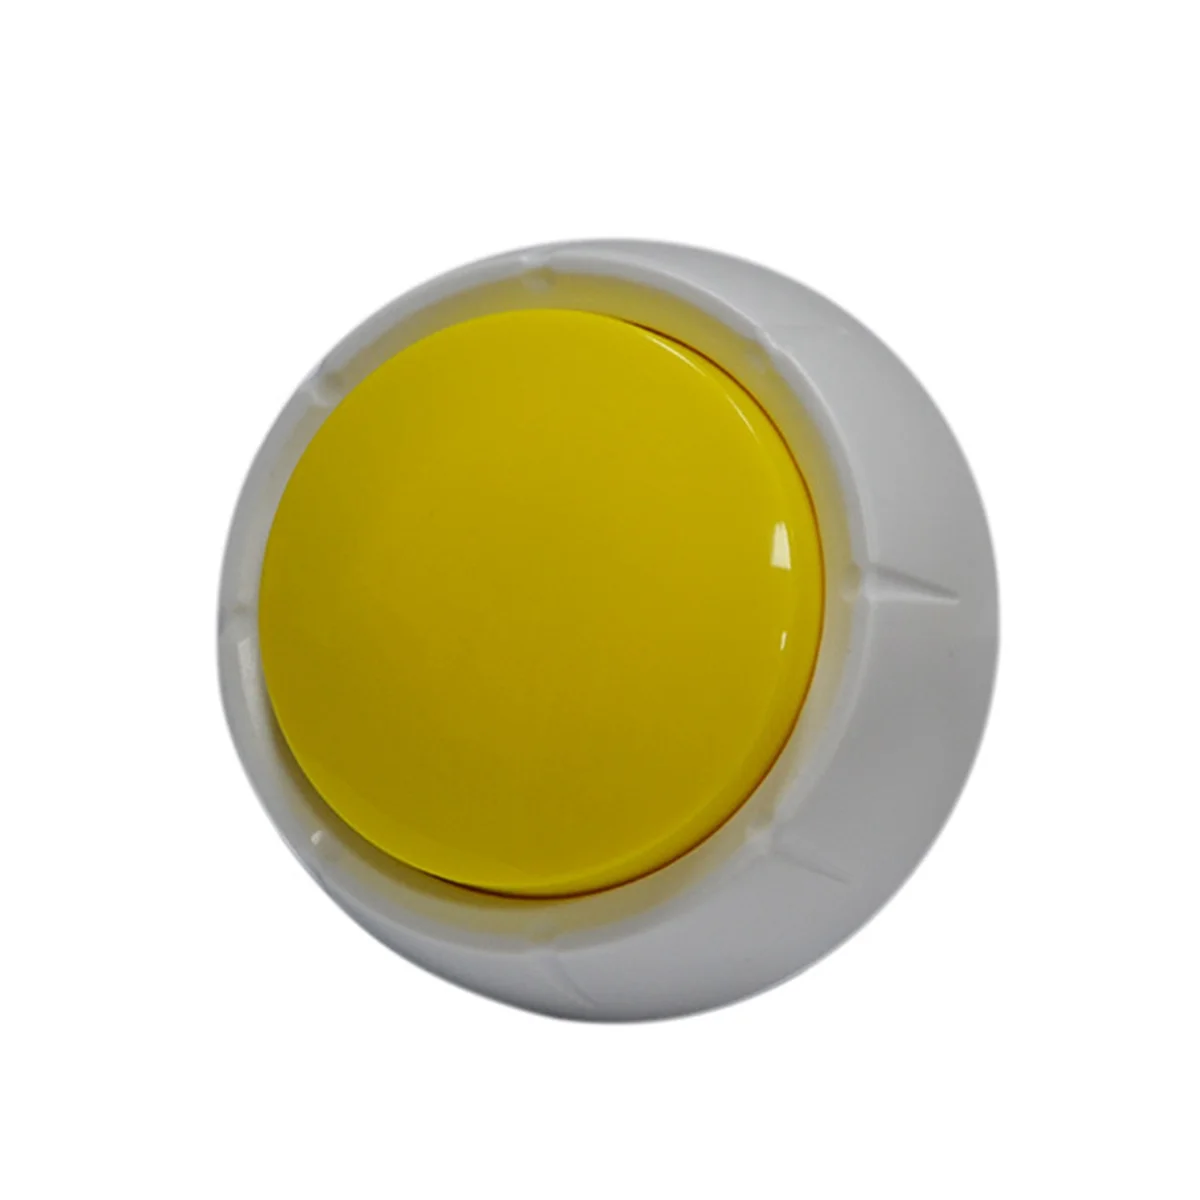 Squeeze Sound Box Music Box Recordable Voice Sound Button Party Supplies Communication Button Buzzer Sounding Box Yellow